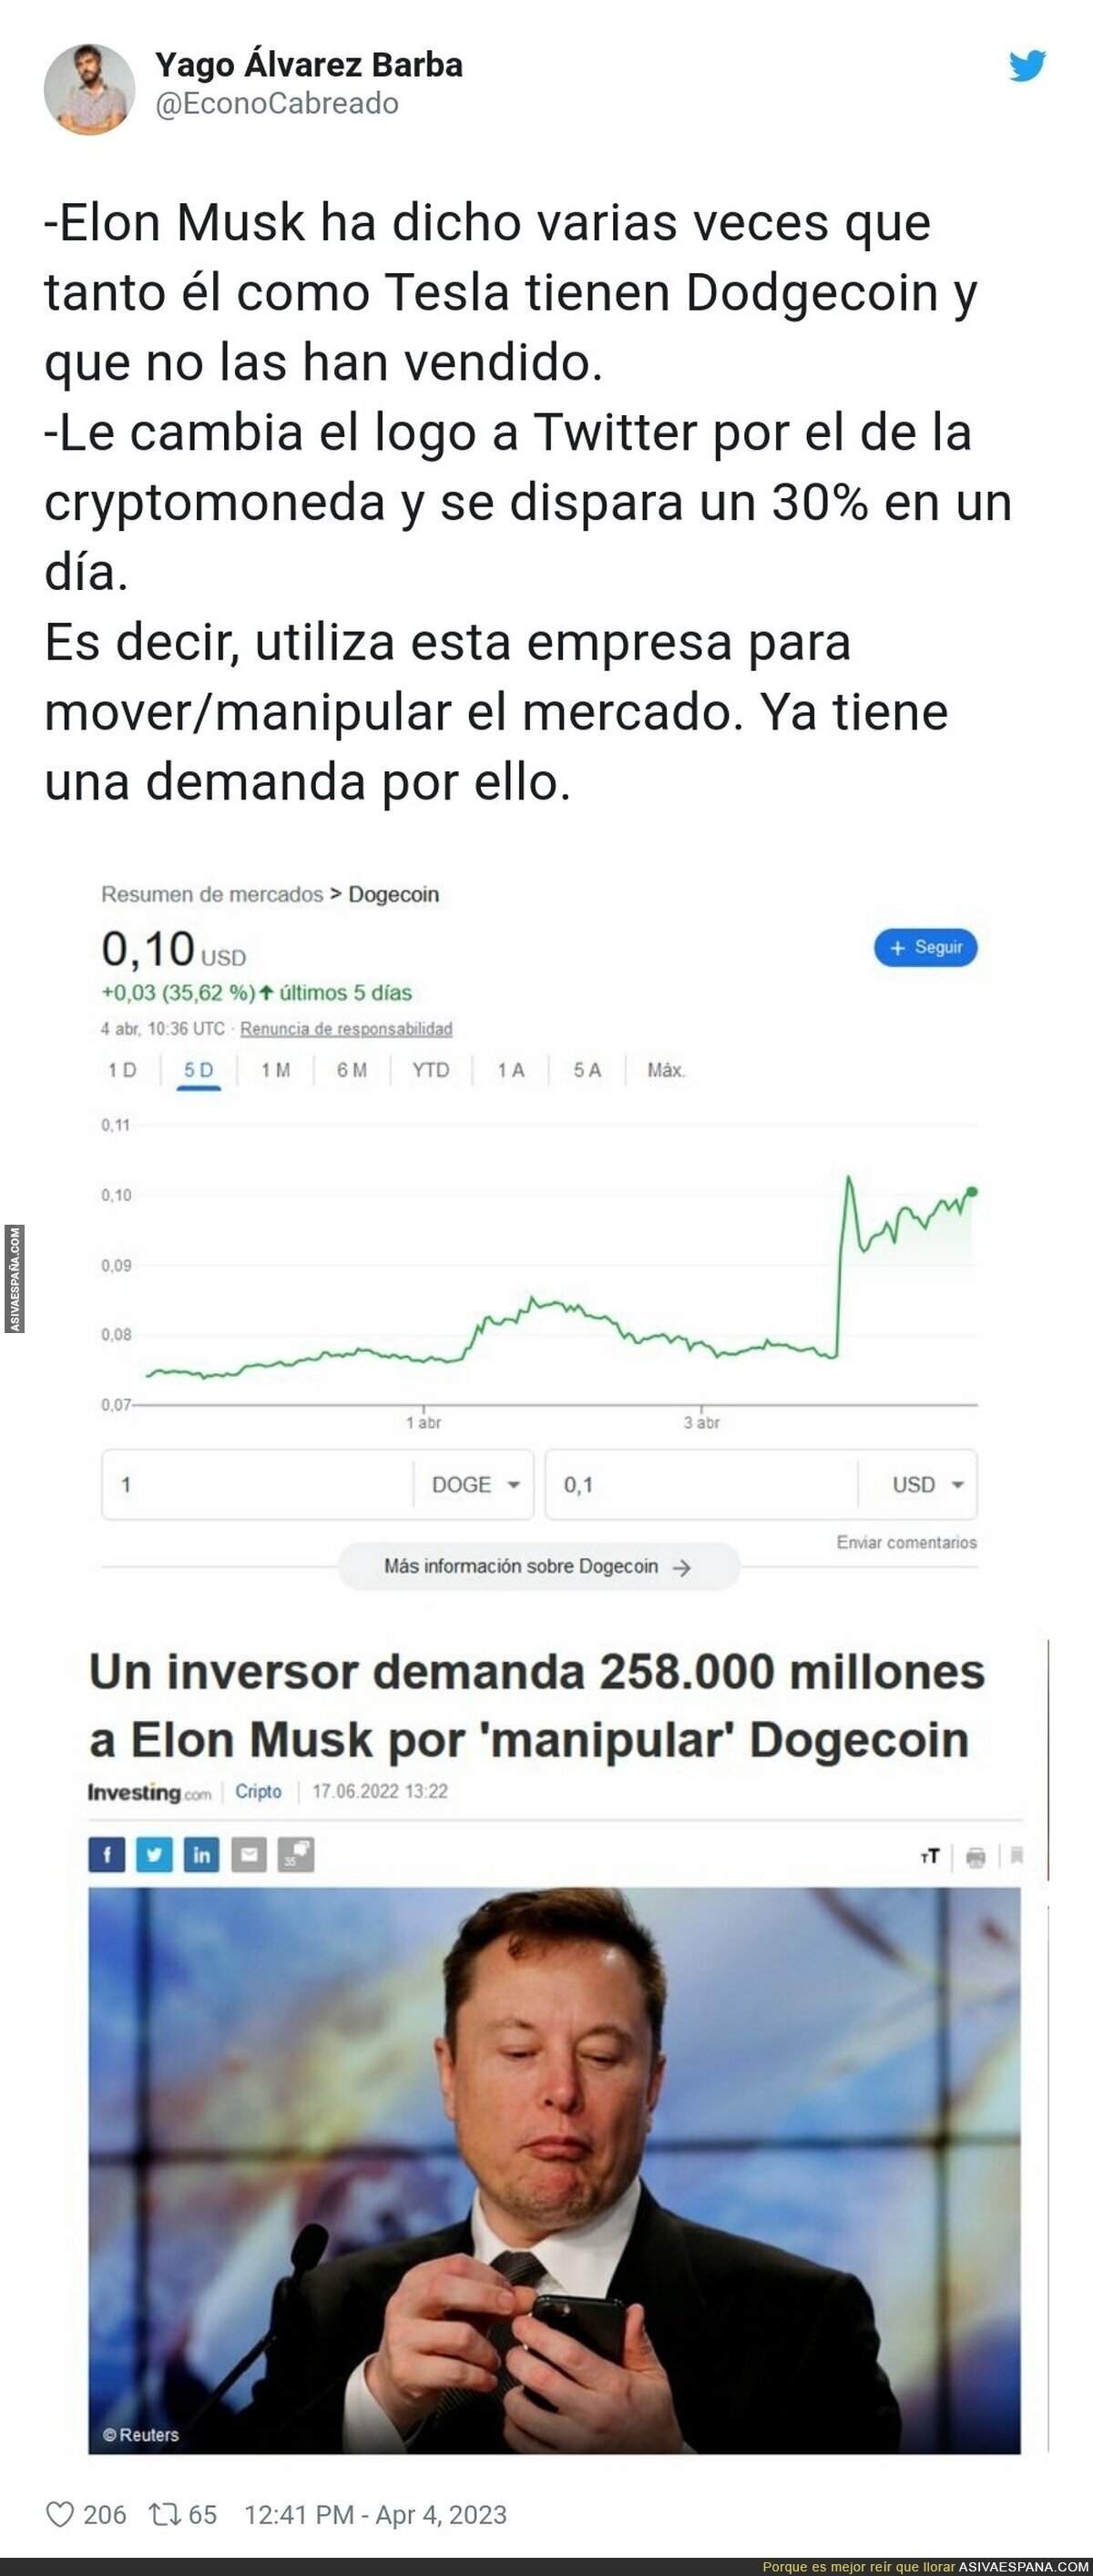 Los intereses de Elon Musk